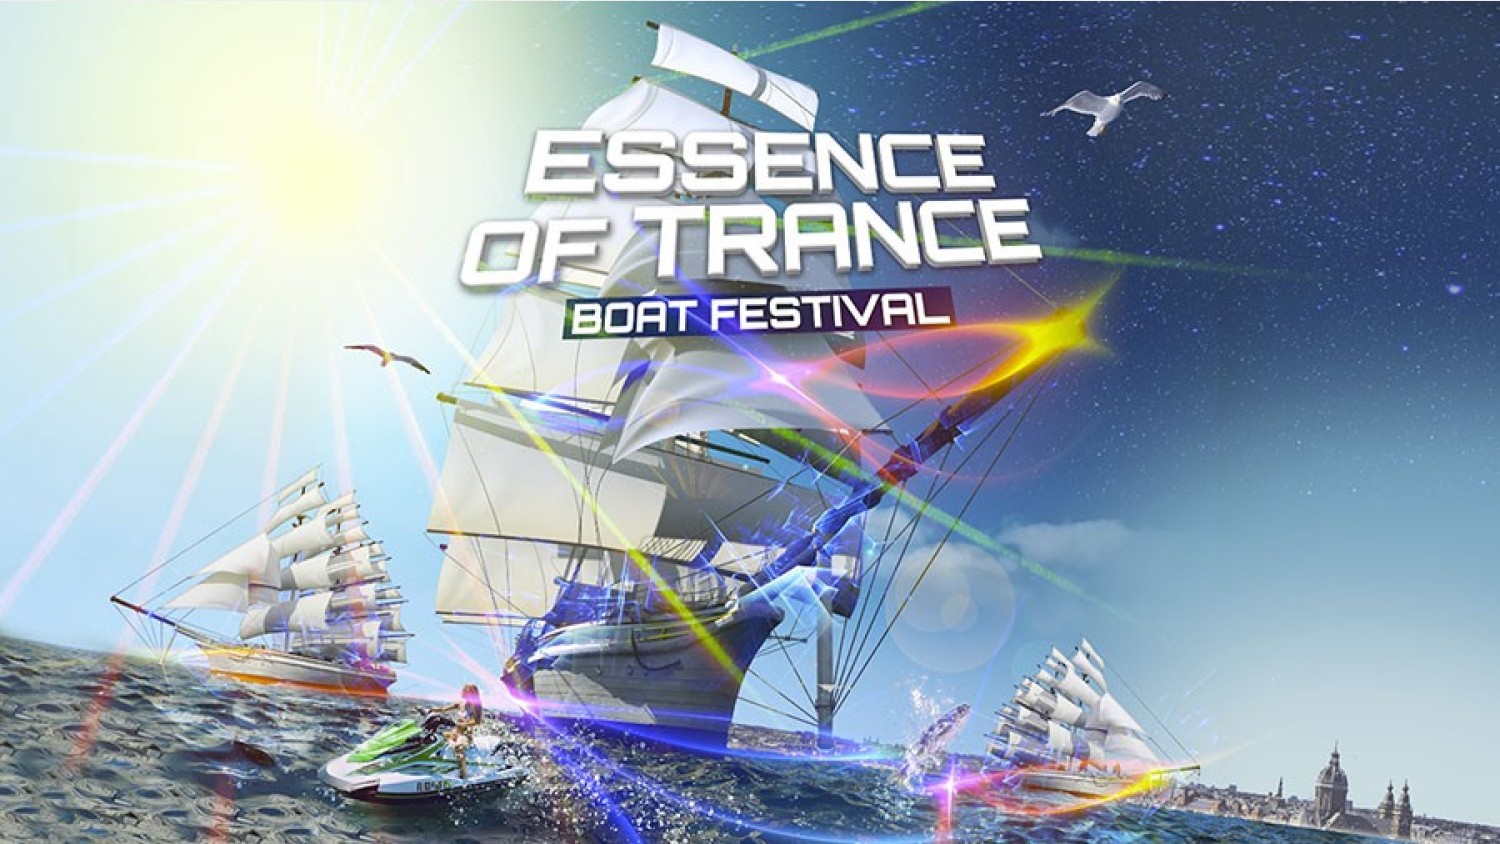 Party nieuws: Unieke belevenis tijdens Essence of Trance botenfestival